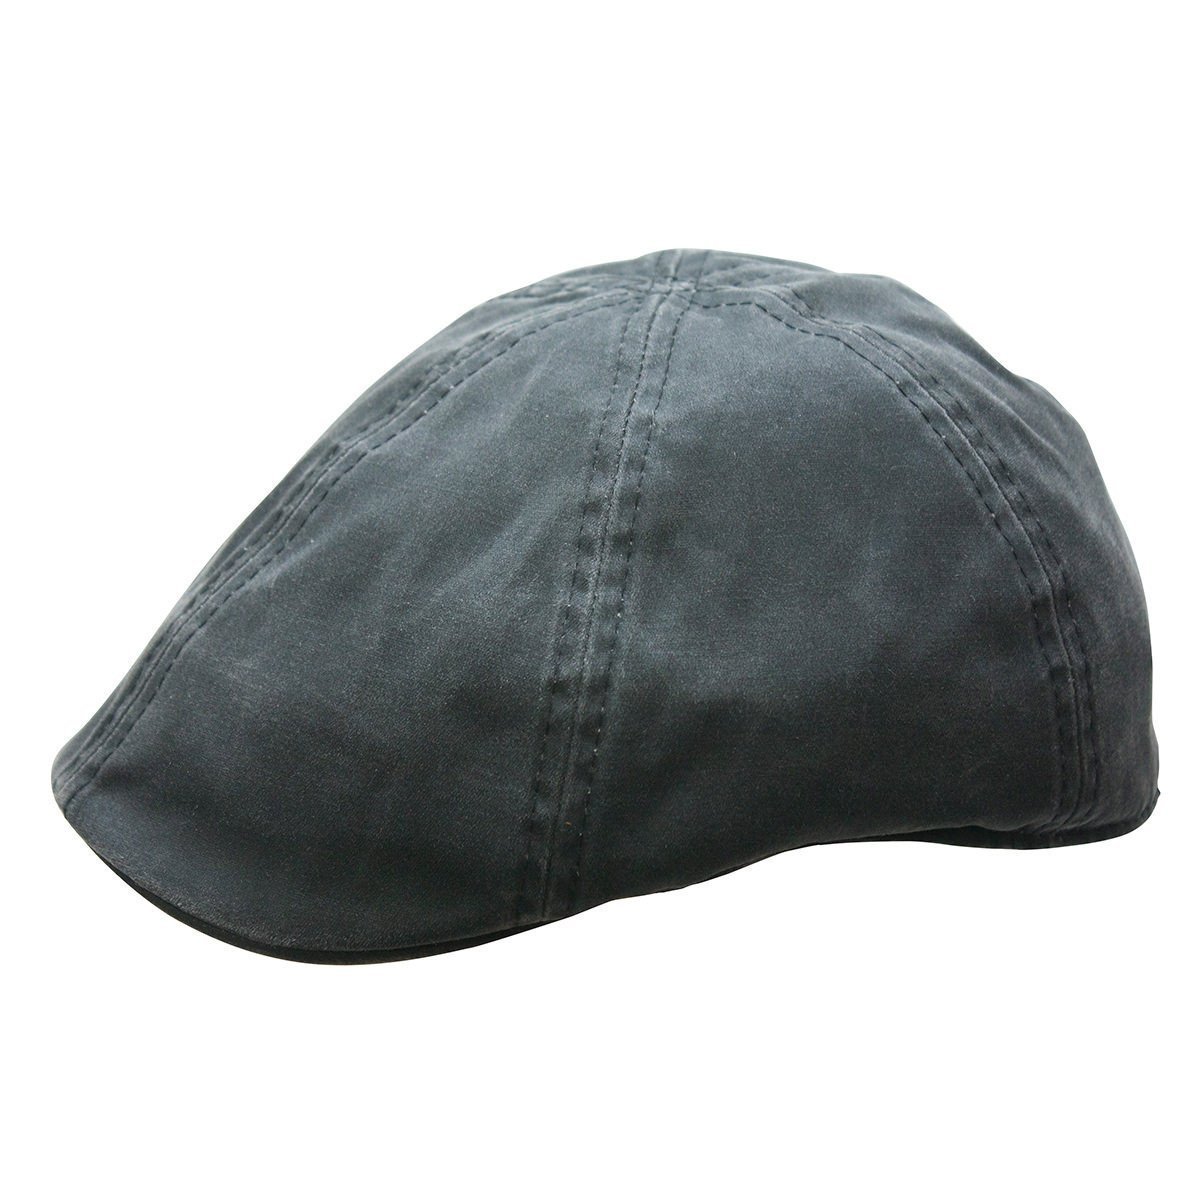 Black cloth newsboy cap that looks like leather